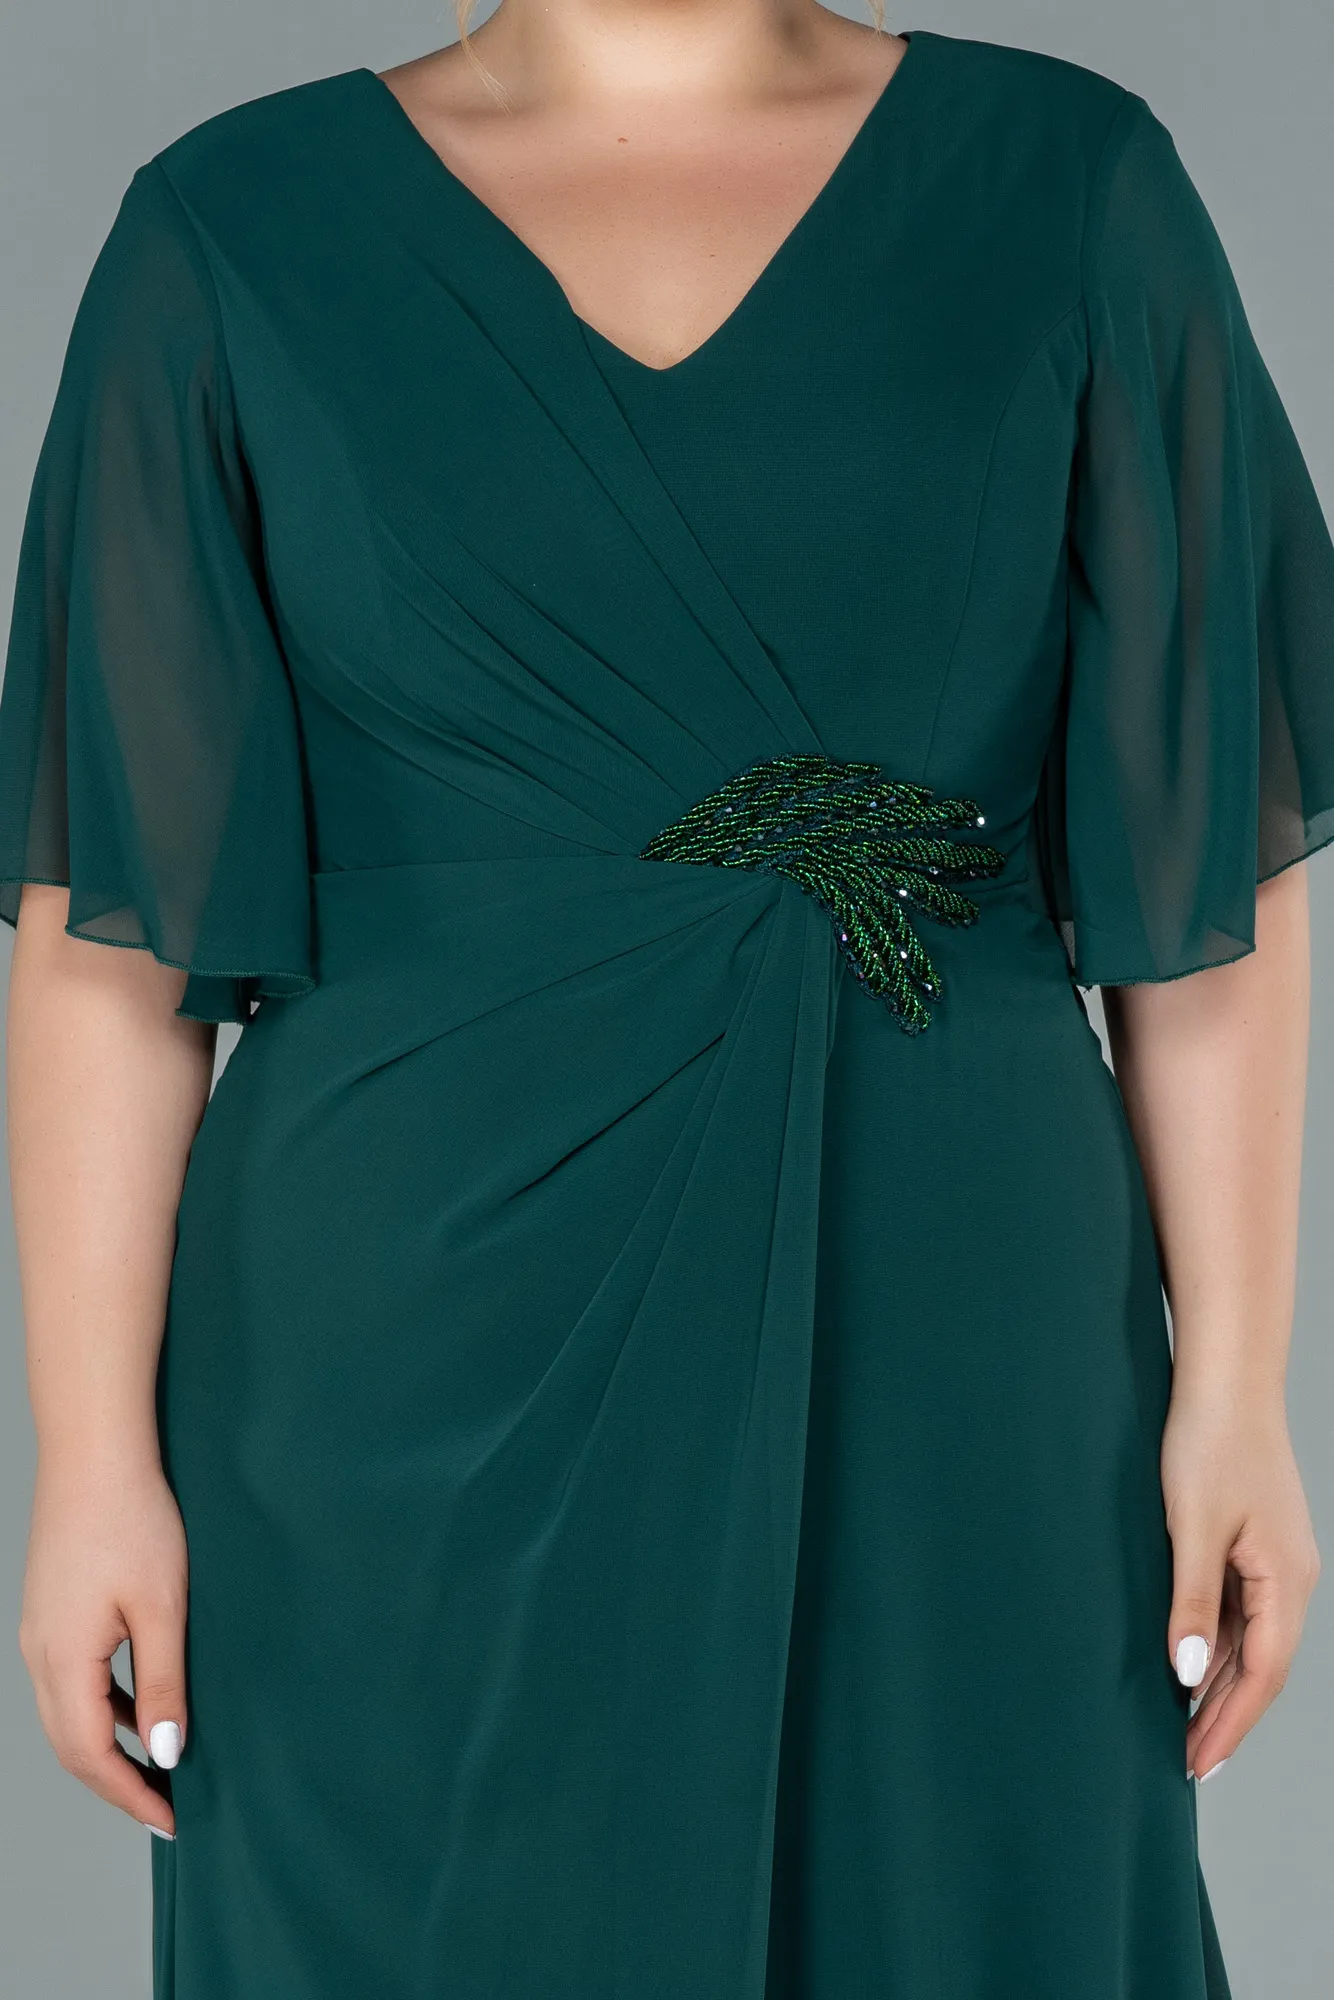 Emerald Green-Long Chiffon Oversized Evening Dress ABU2748